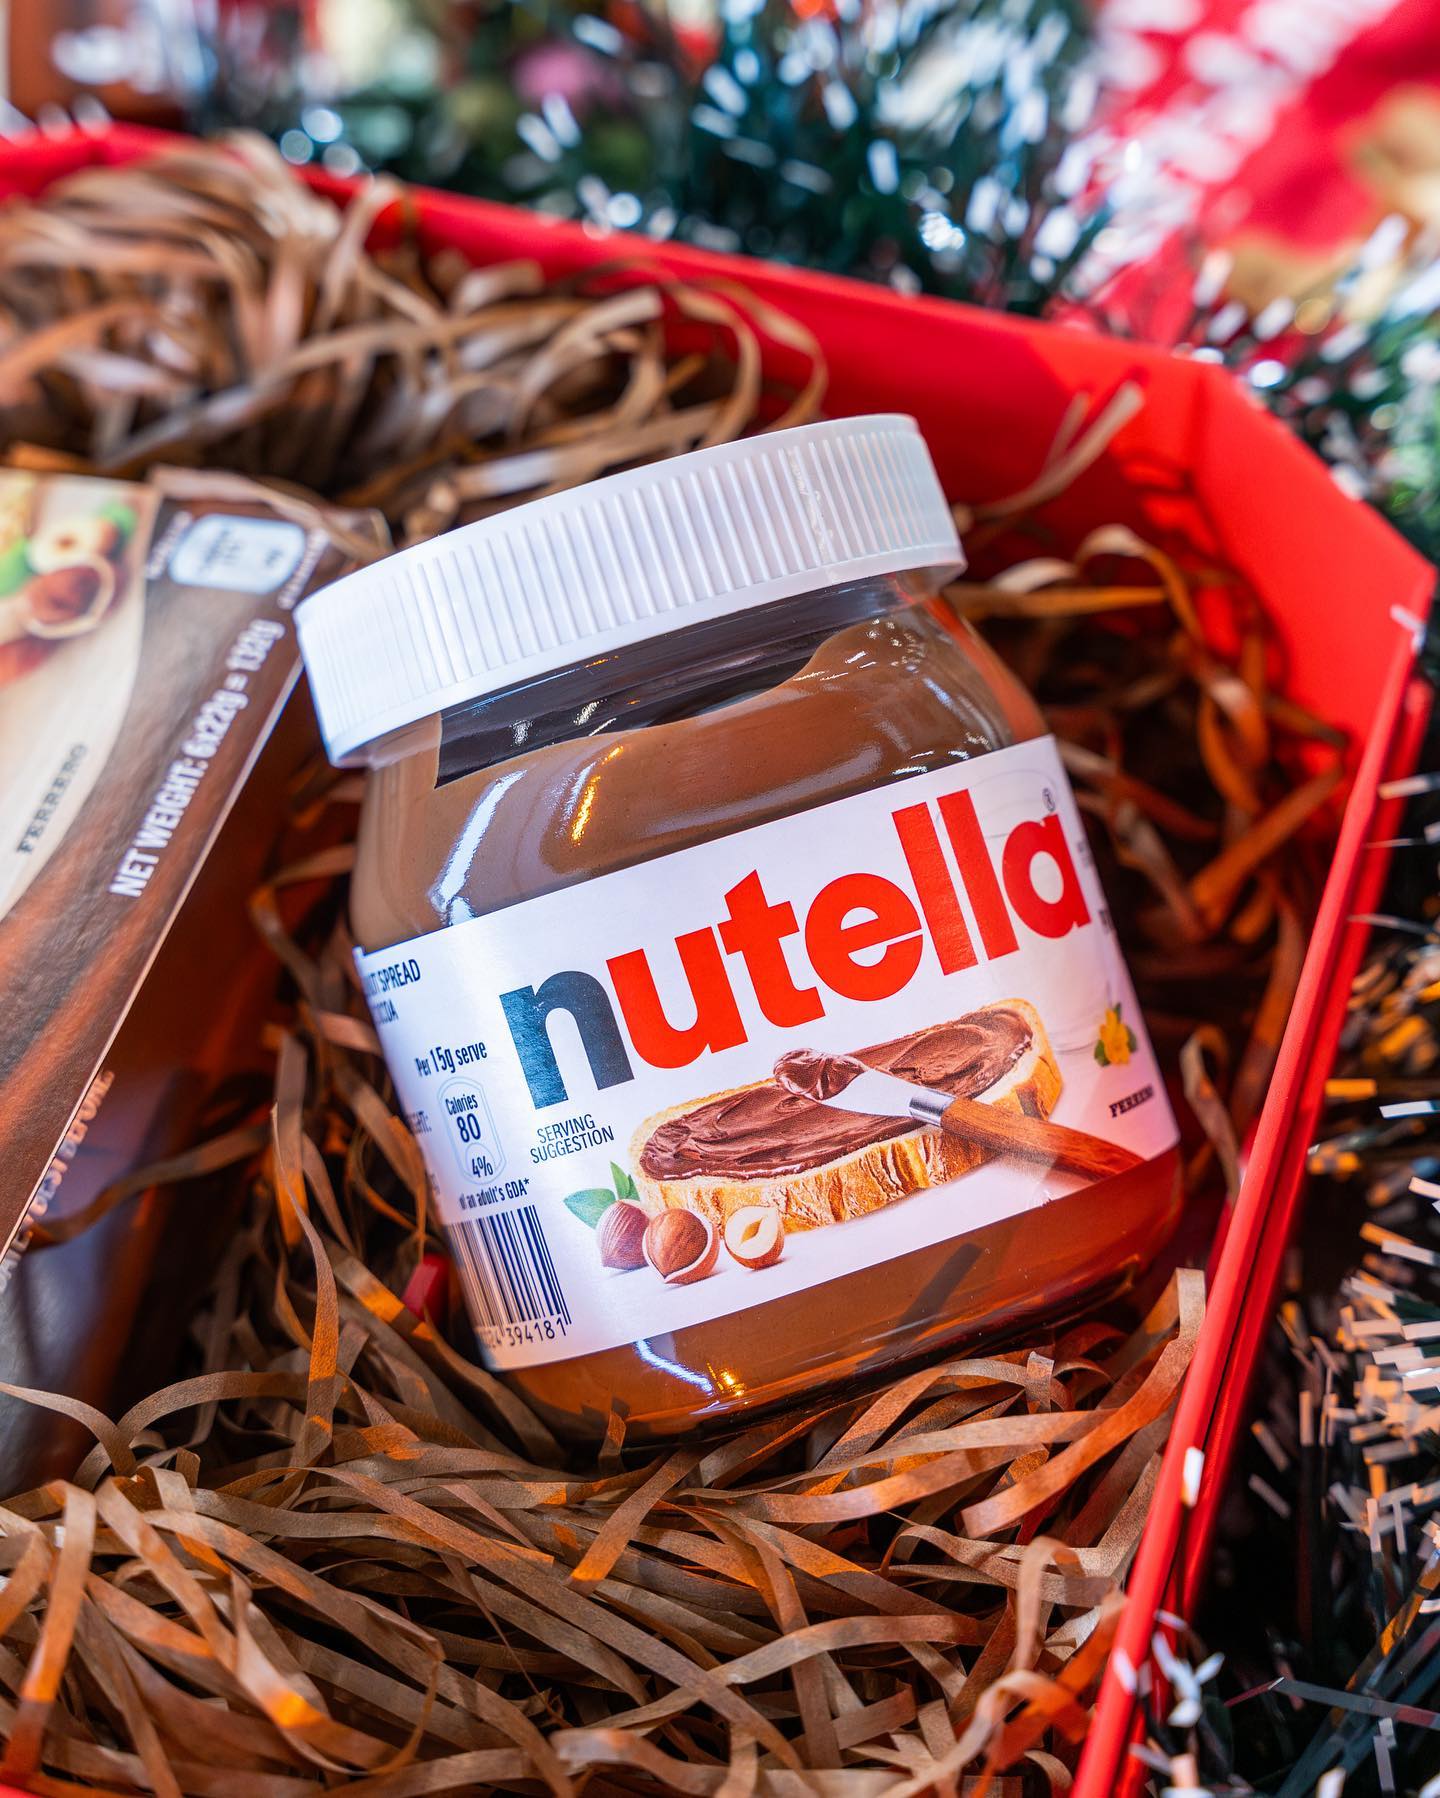 mispronounced brand names - nutella